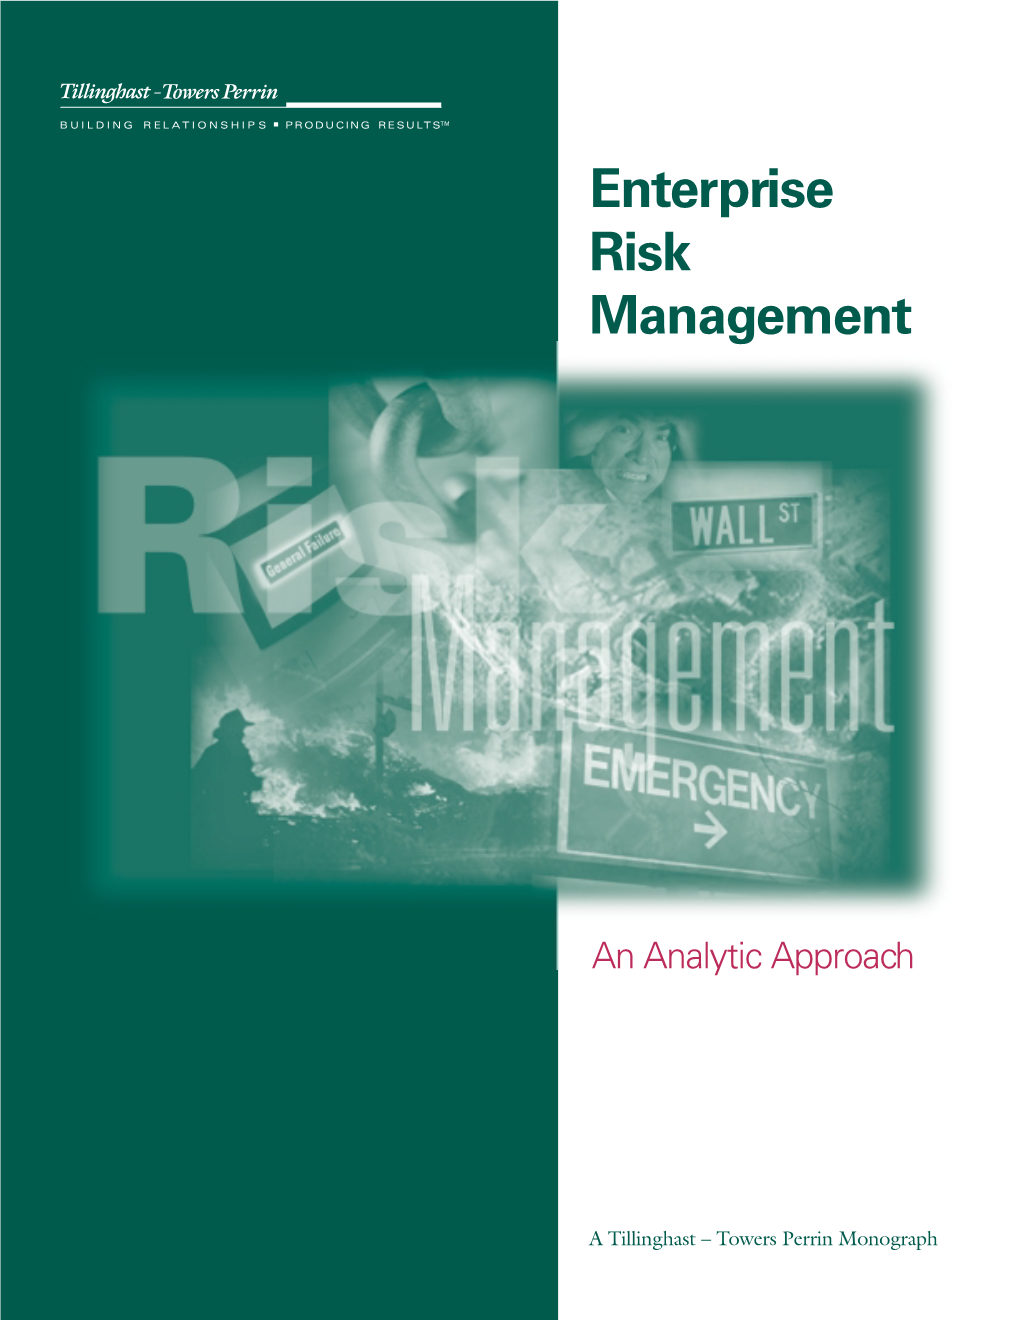 Enterprise Risk Management: an Analytic Approach